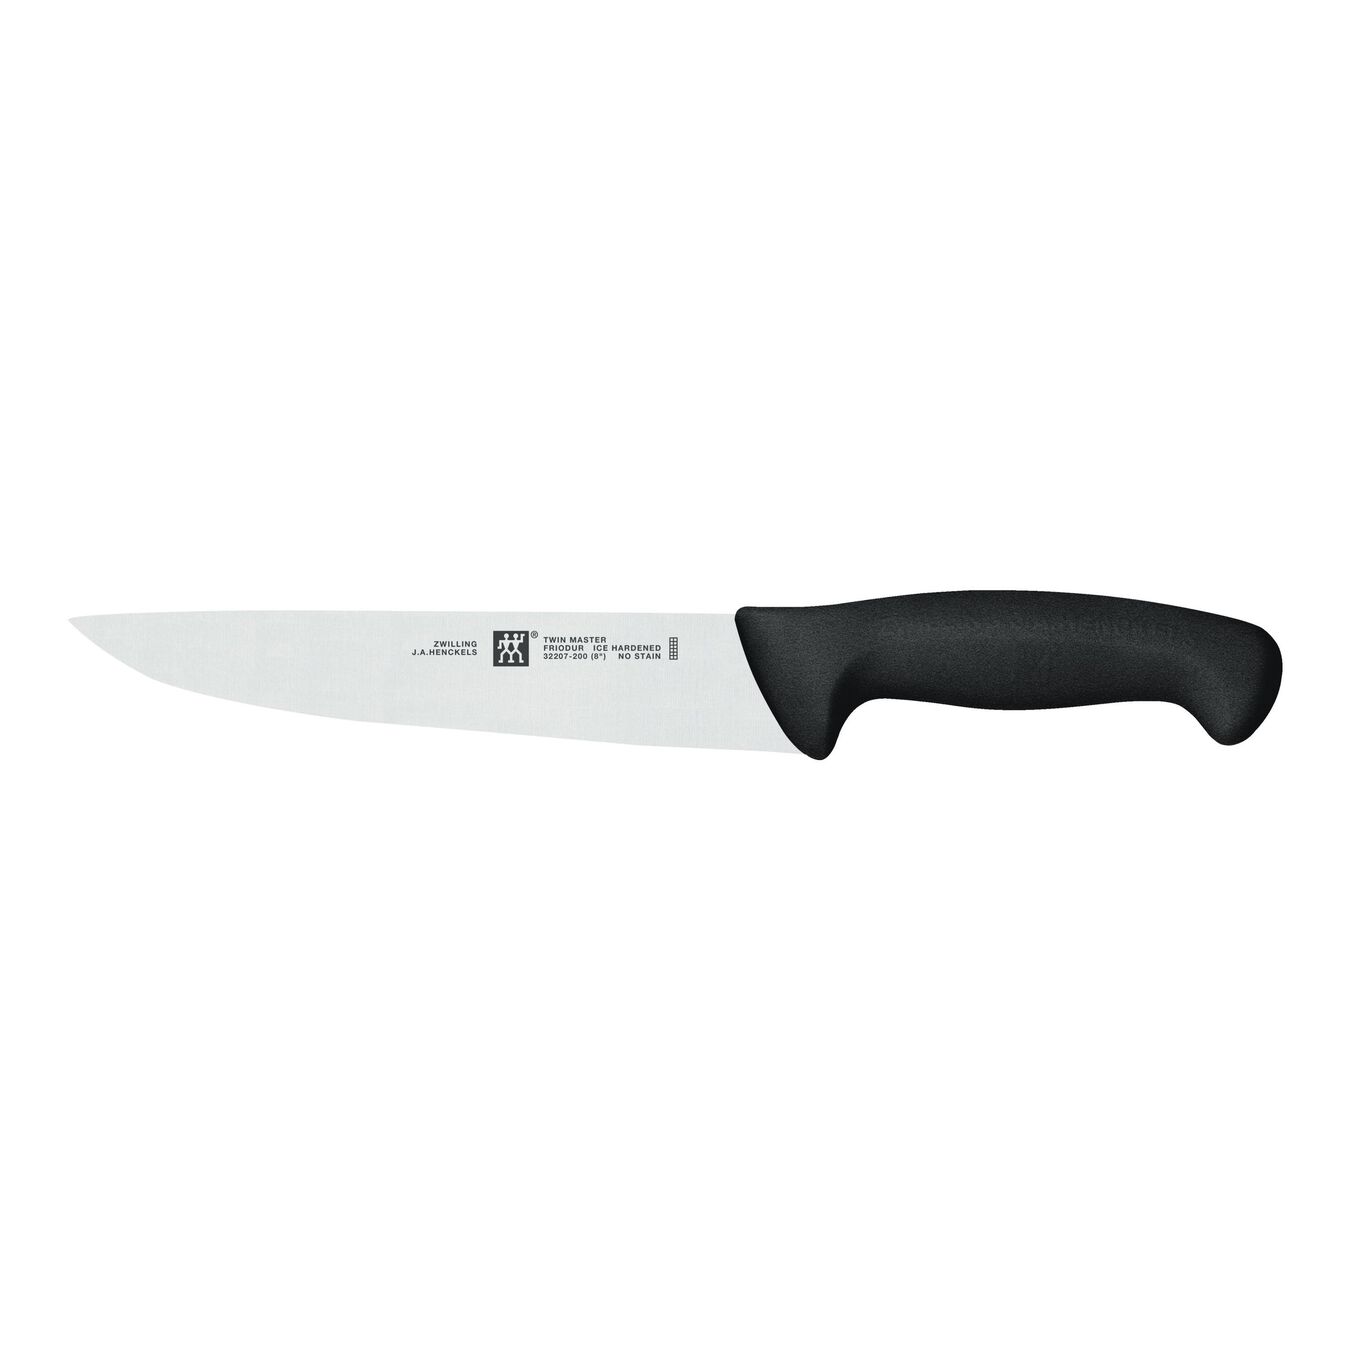 8-inch, Chef's Butcher Knife - Black Handle,,large 1